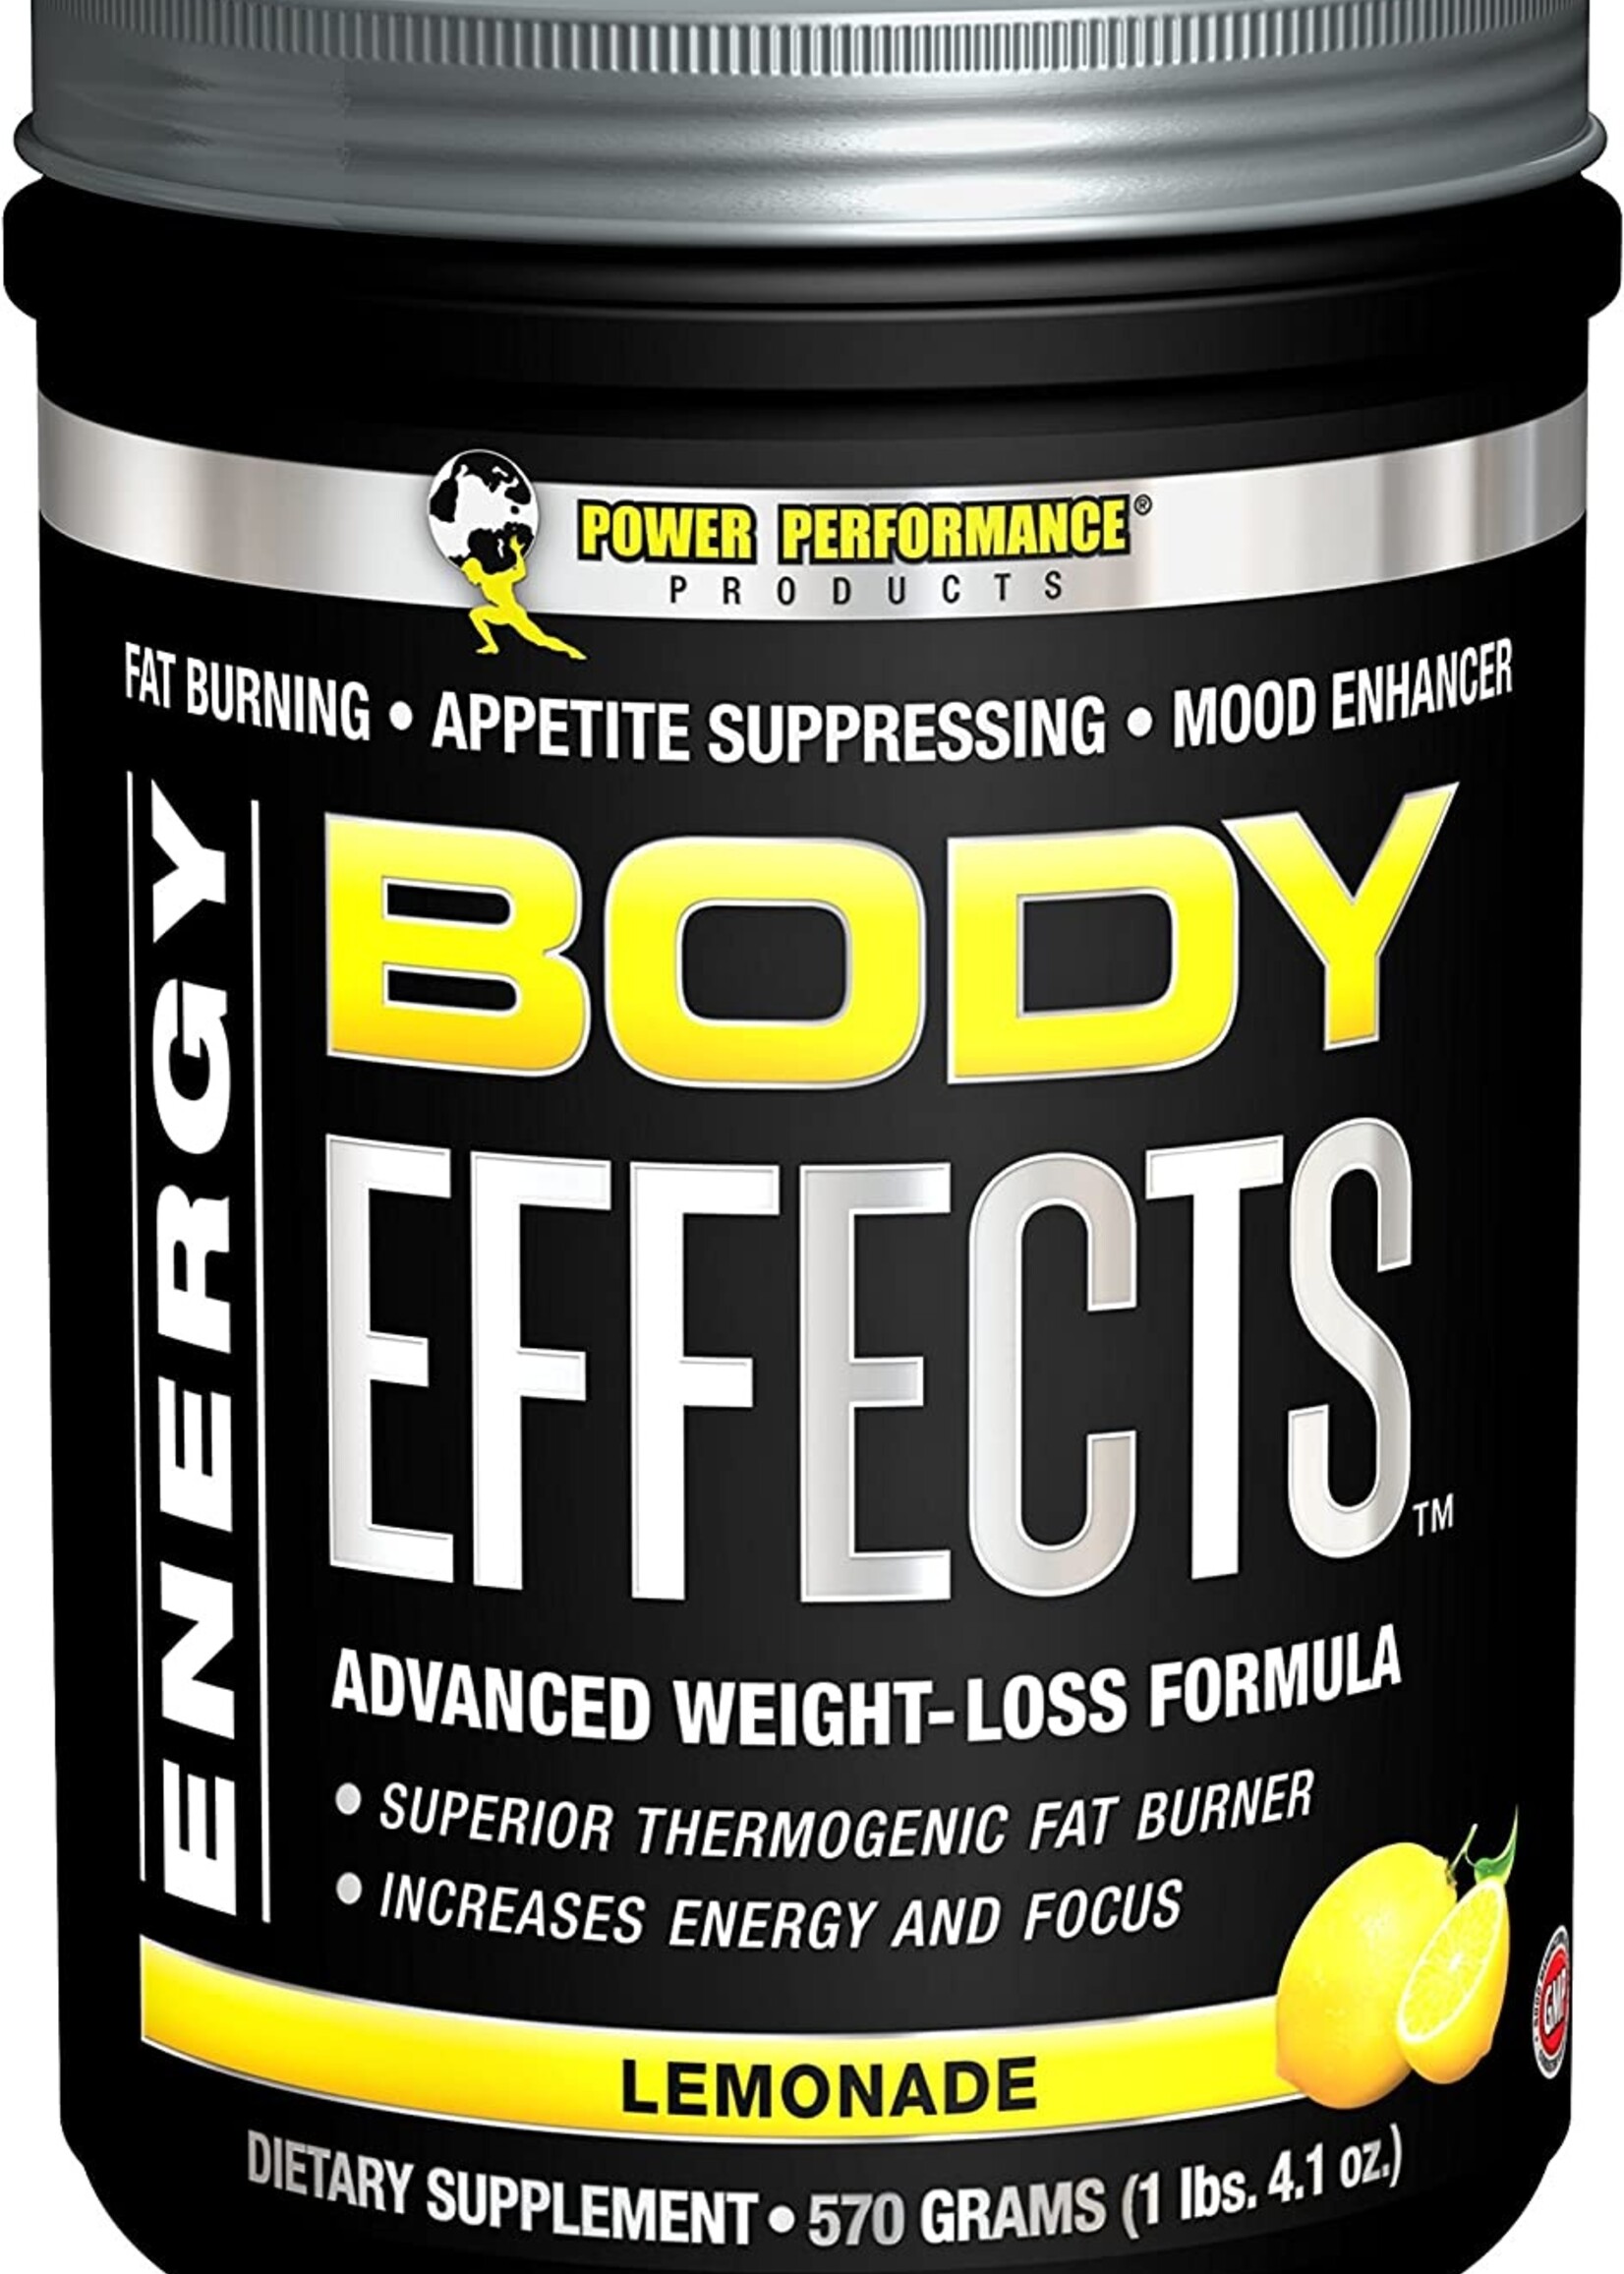 Power Performance Power Performance Body Effects Lemonade